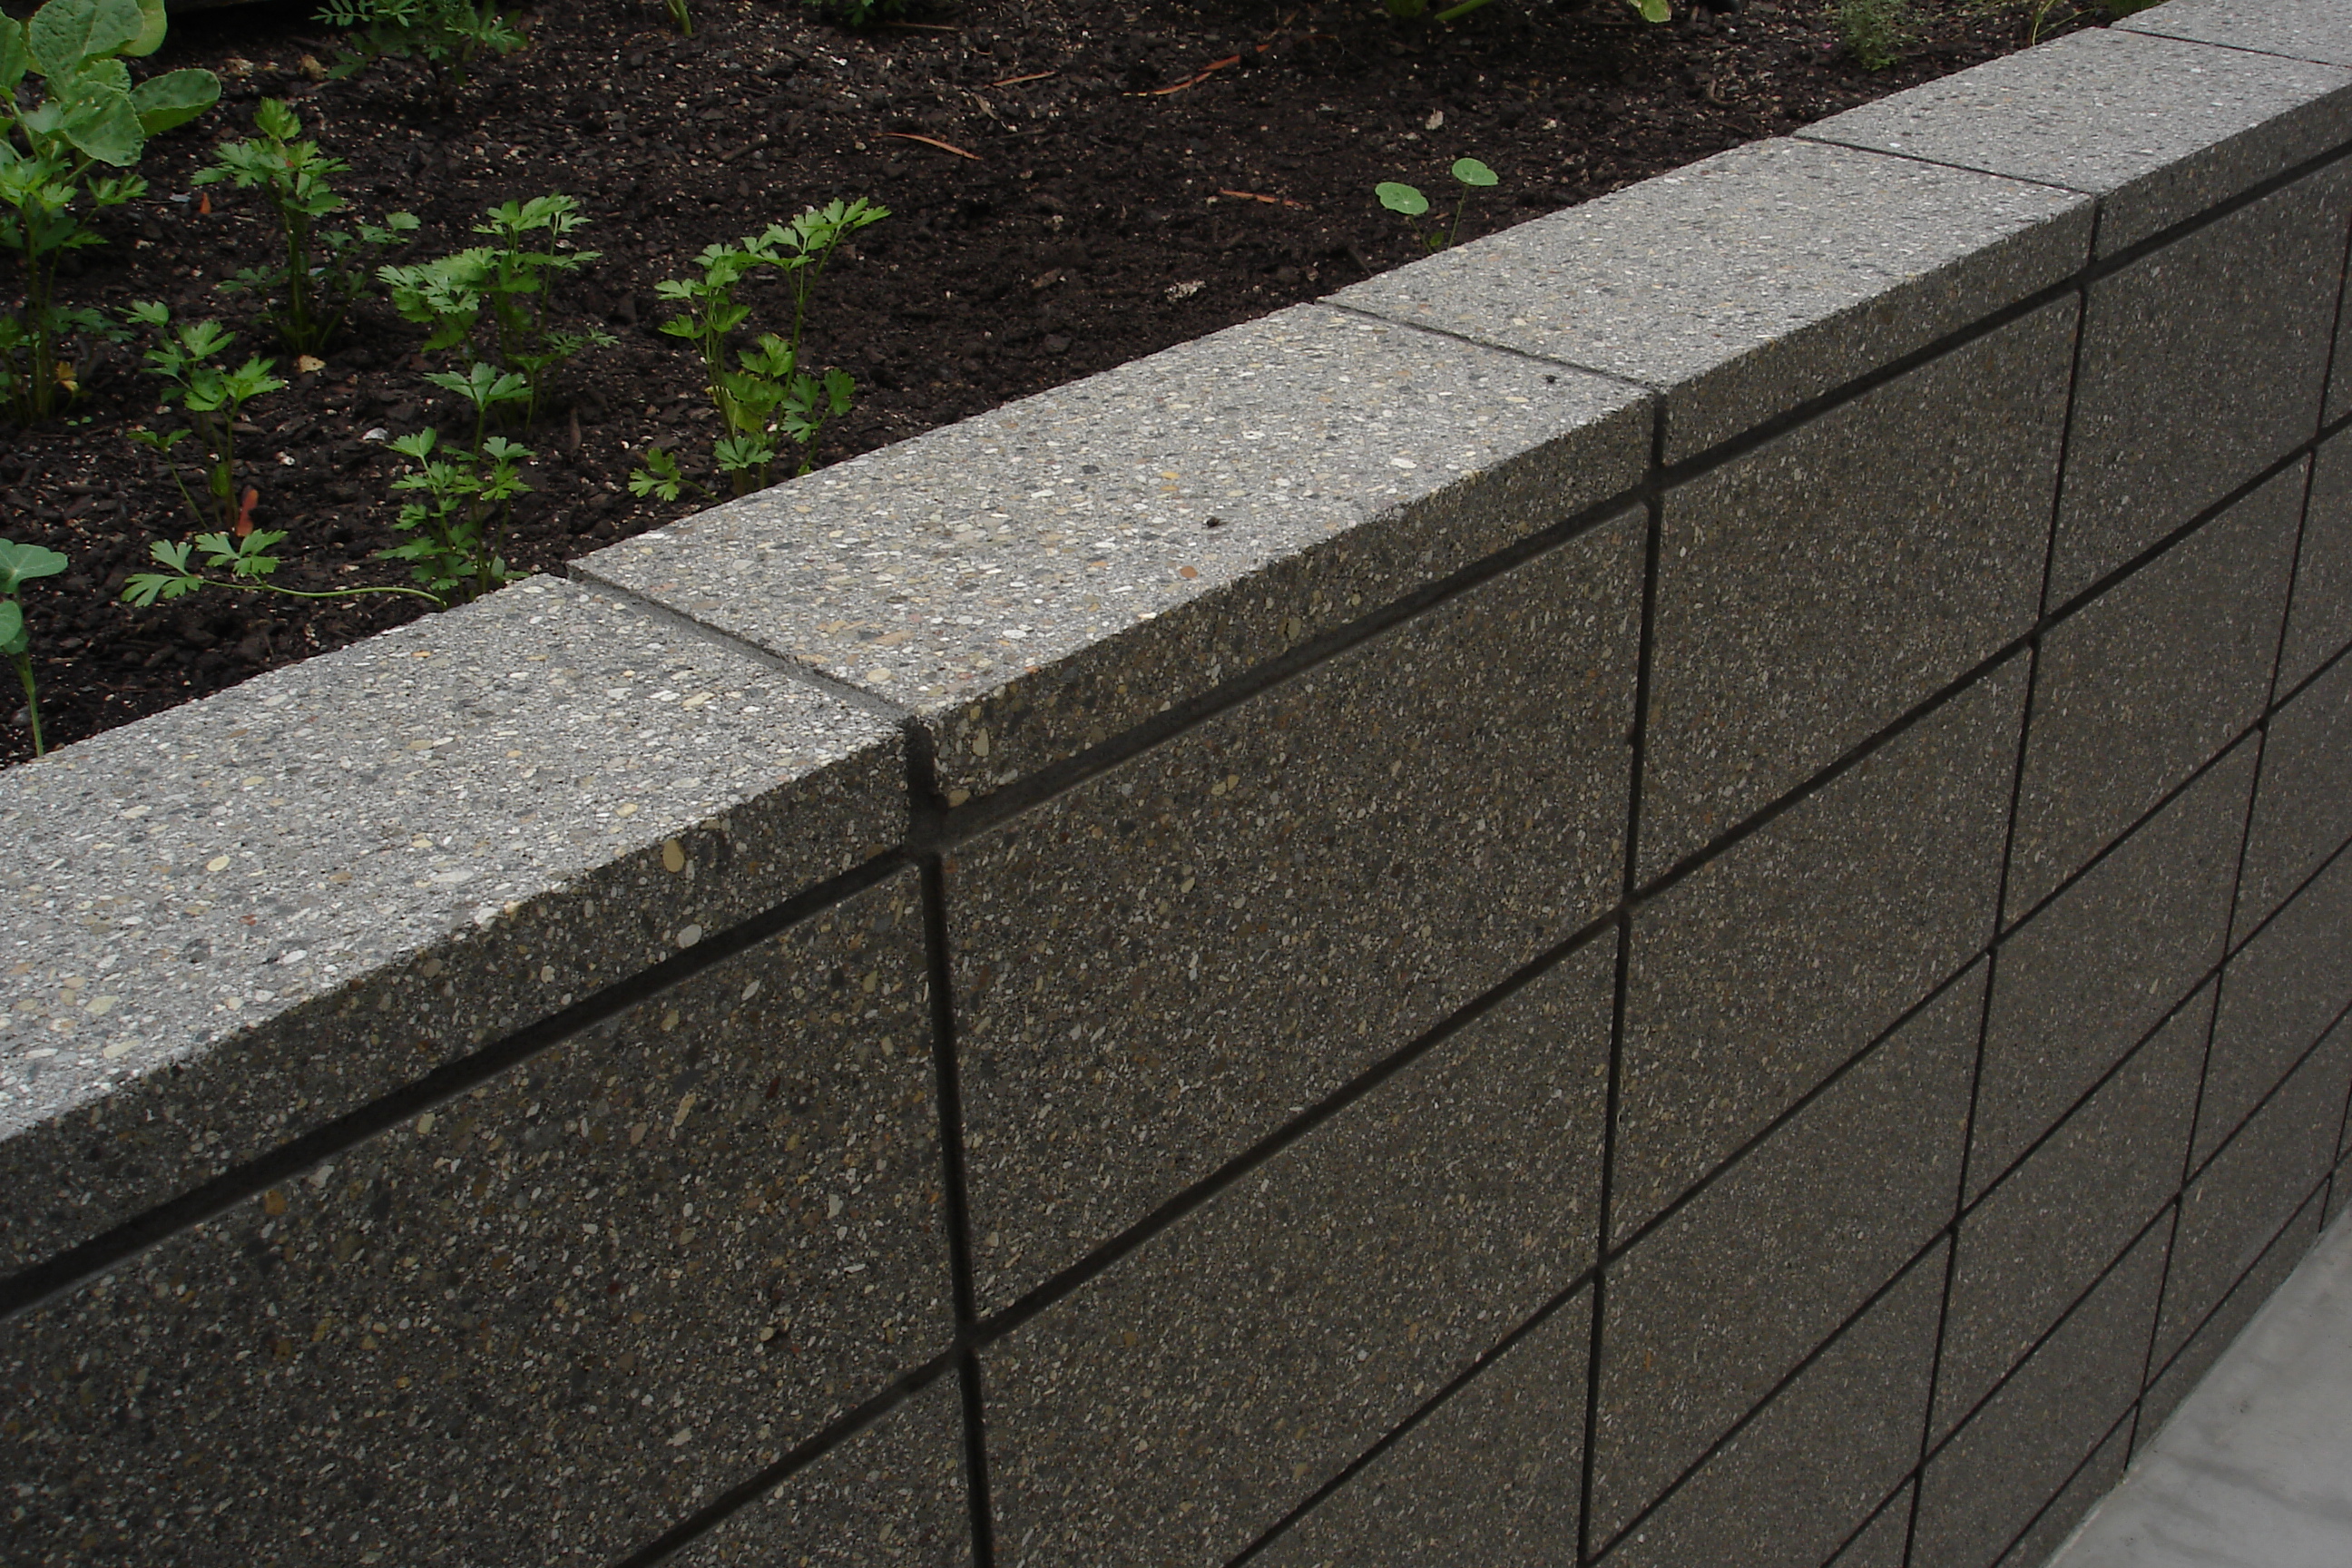 Honed Grey Coloured Masonry Retaining Wall Sealed In a Wet Look Sealer